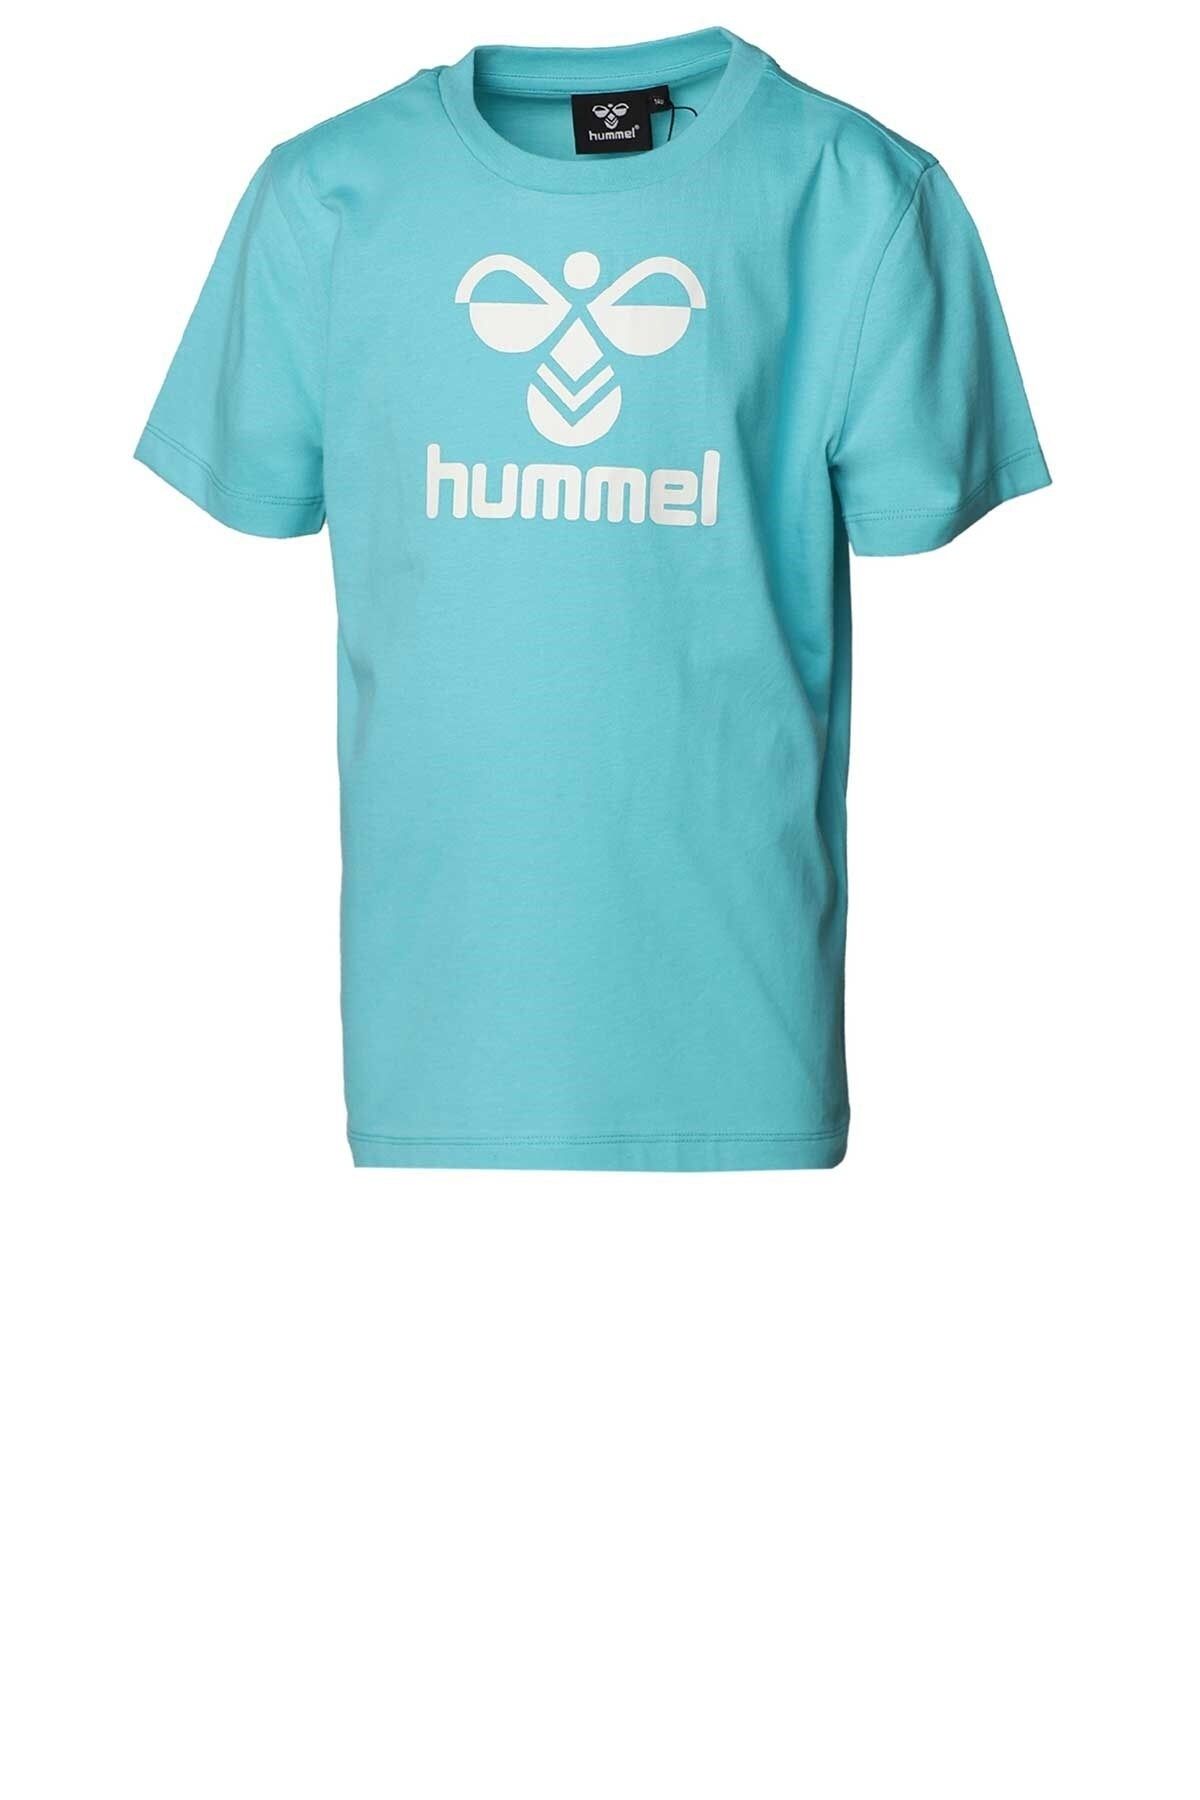 hummel تی شرت کودک لورن 911653-7966